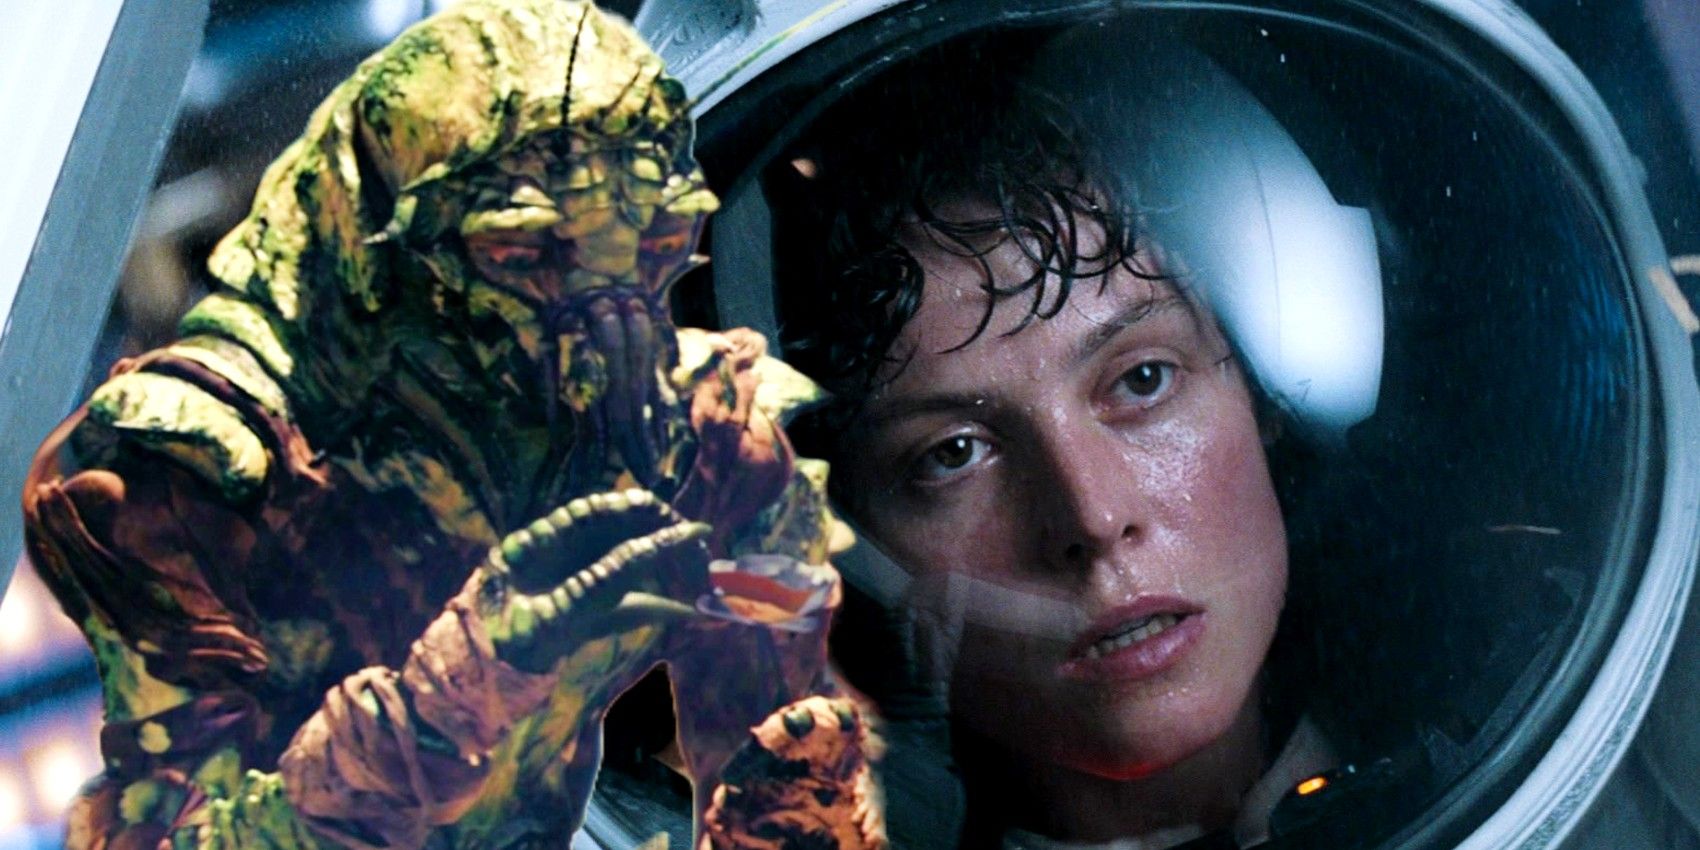 Custom image of the alien in District 9 and Ripley in her astronaut suit in Alien